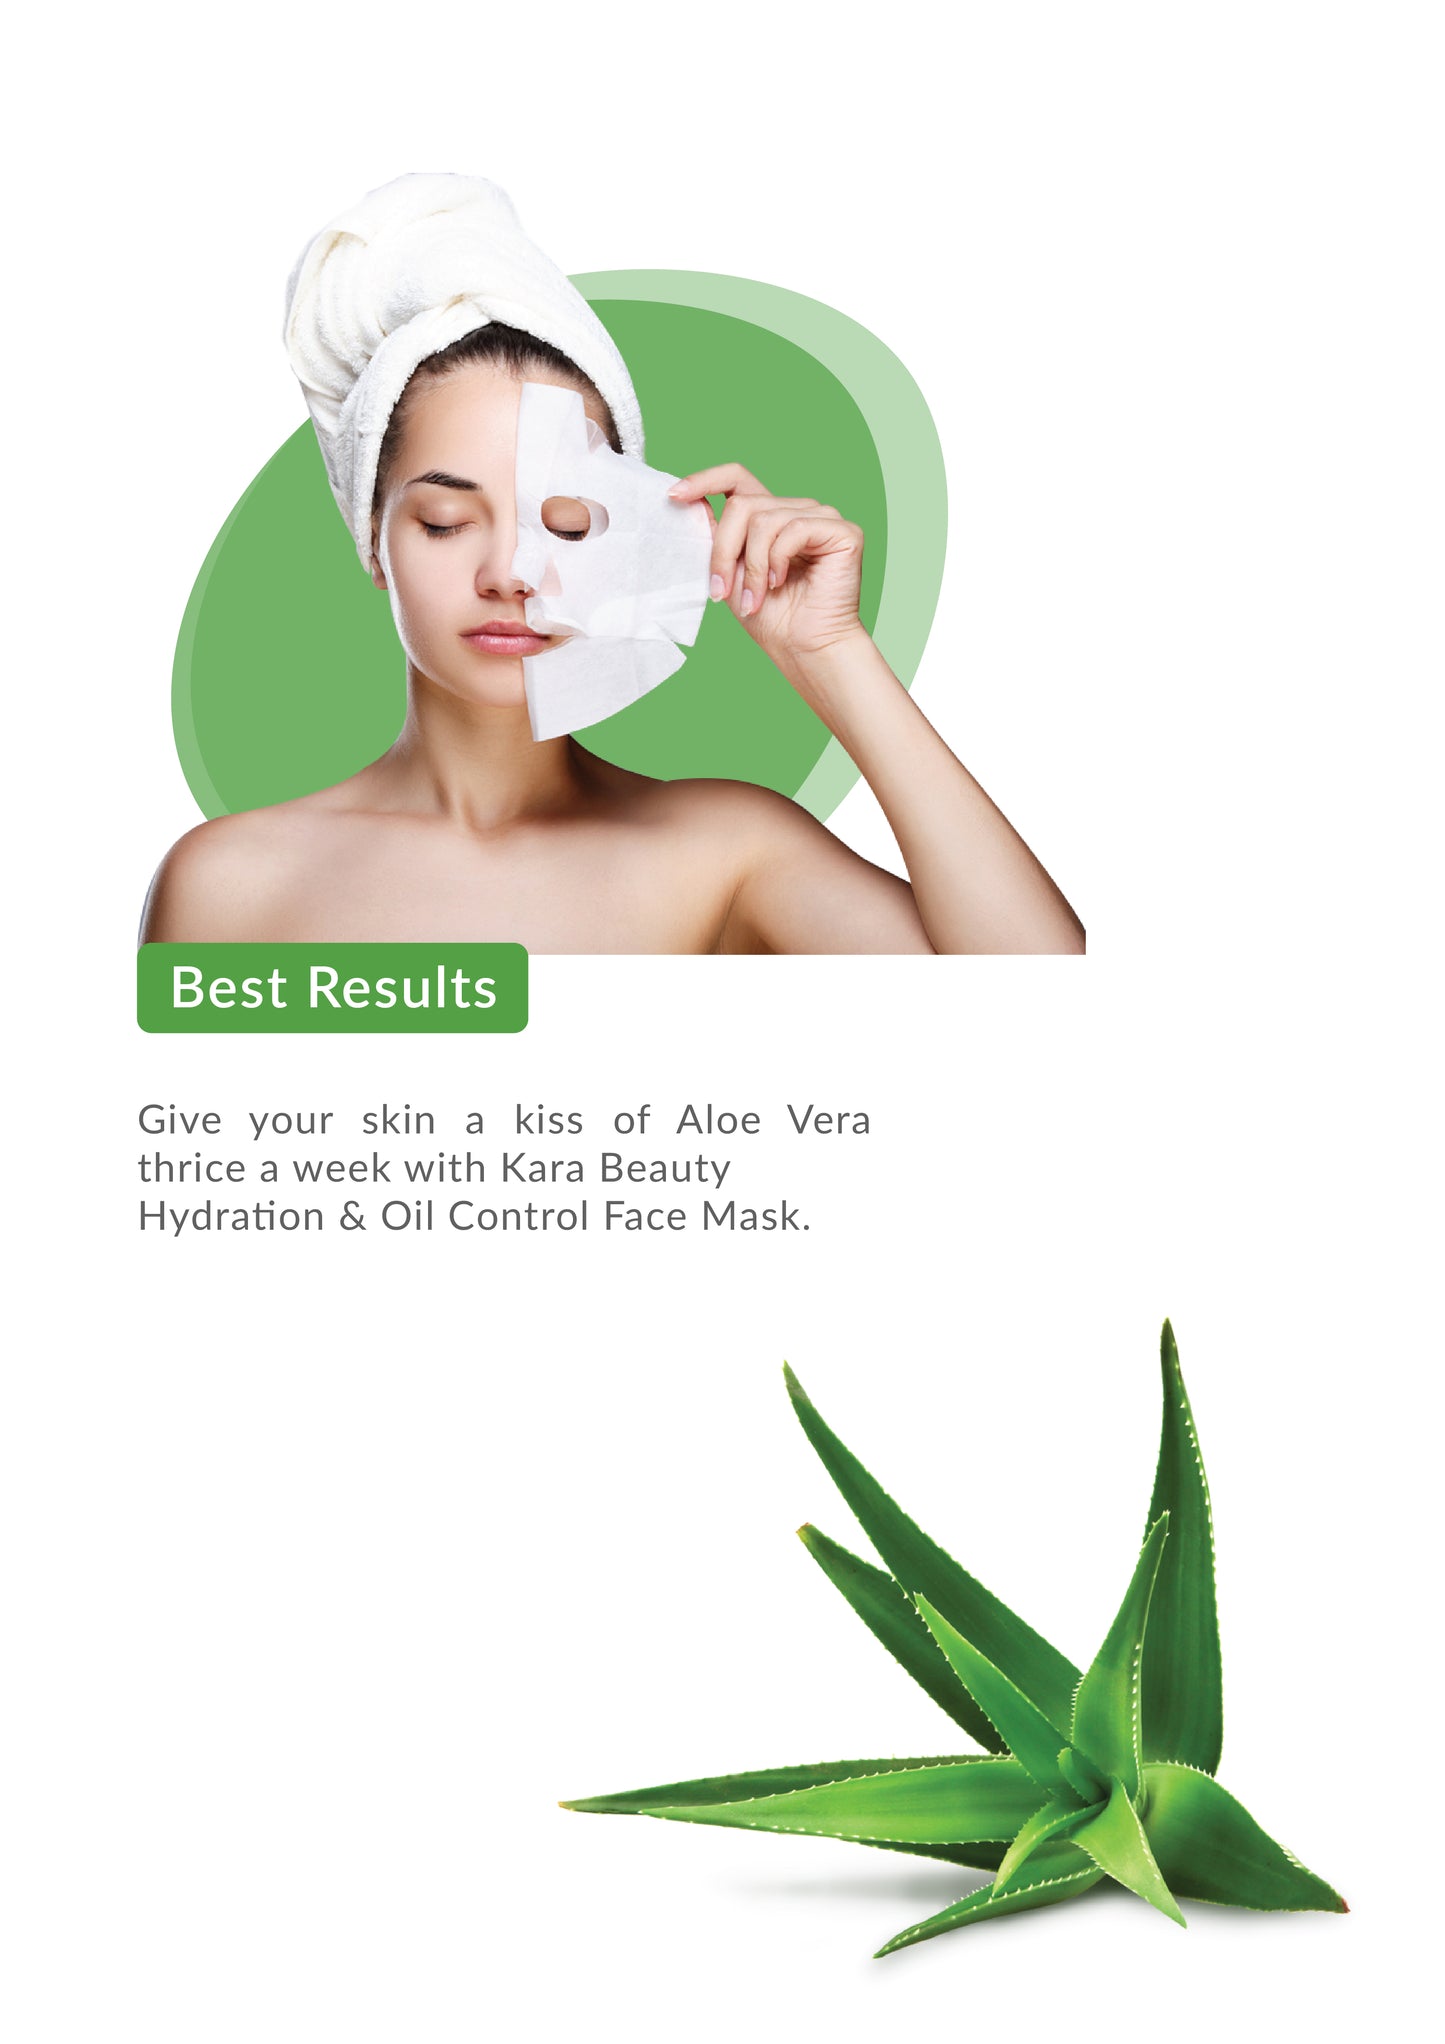 Kara Face Mask, Beauty Hydration & Oil Control, Aloe Vera - Pack of 3